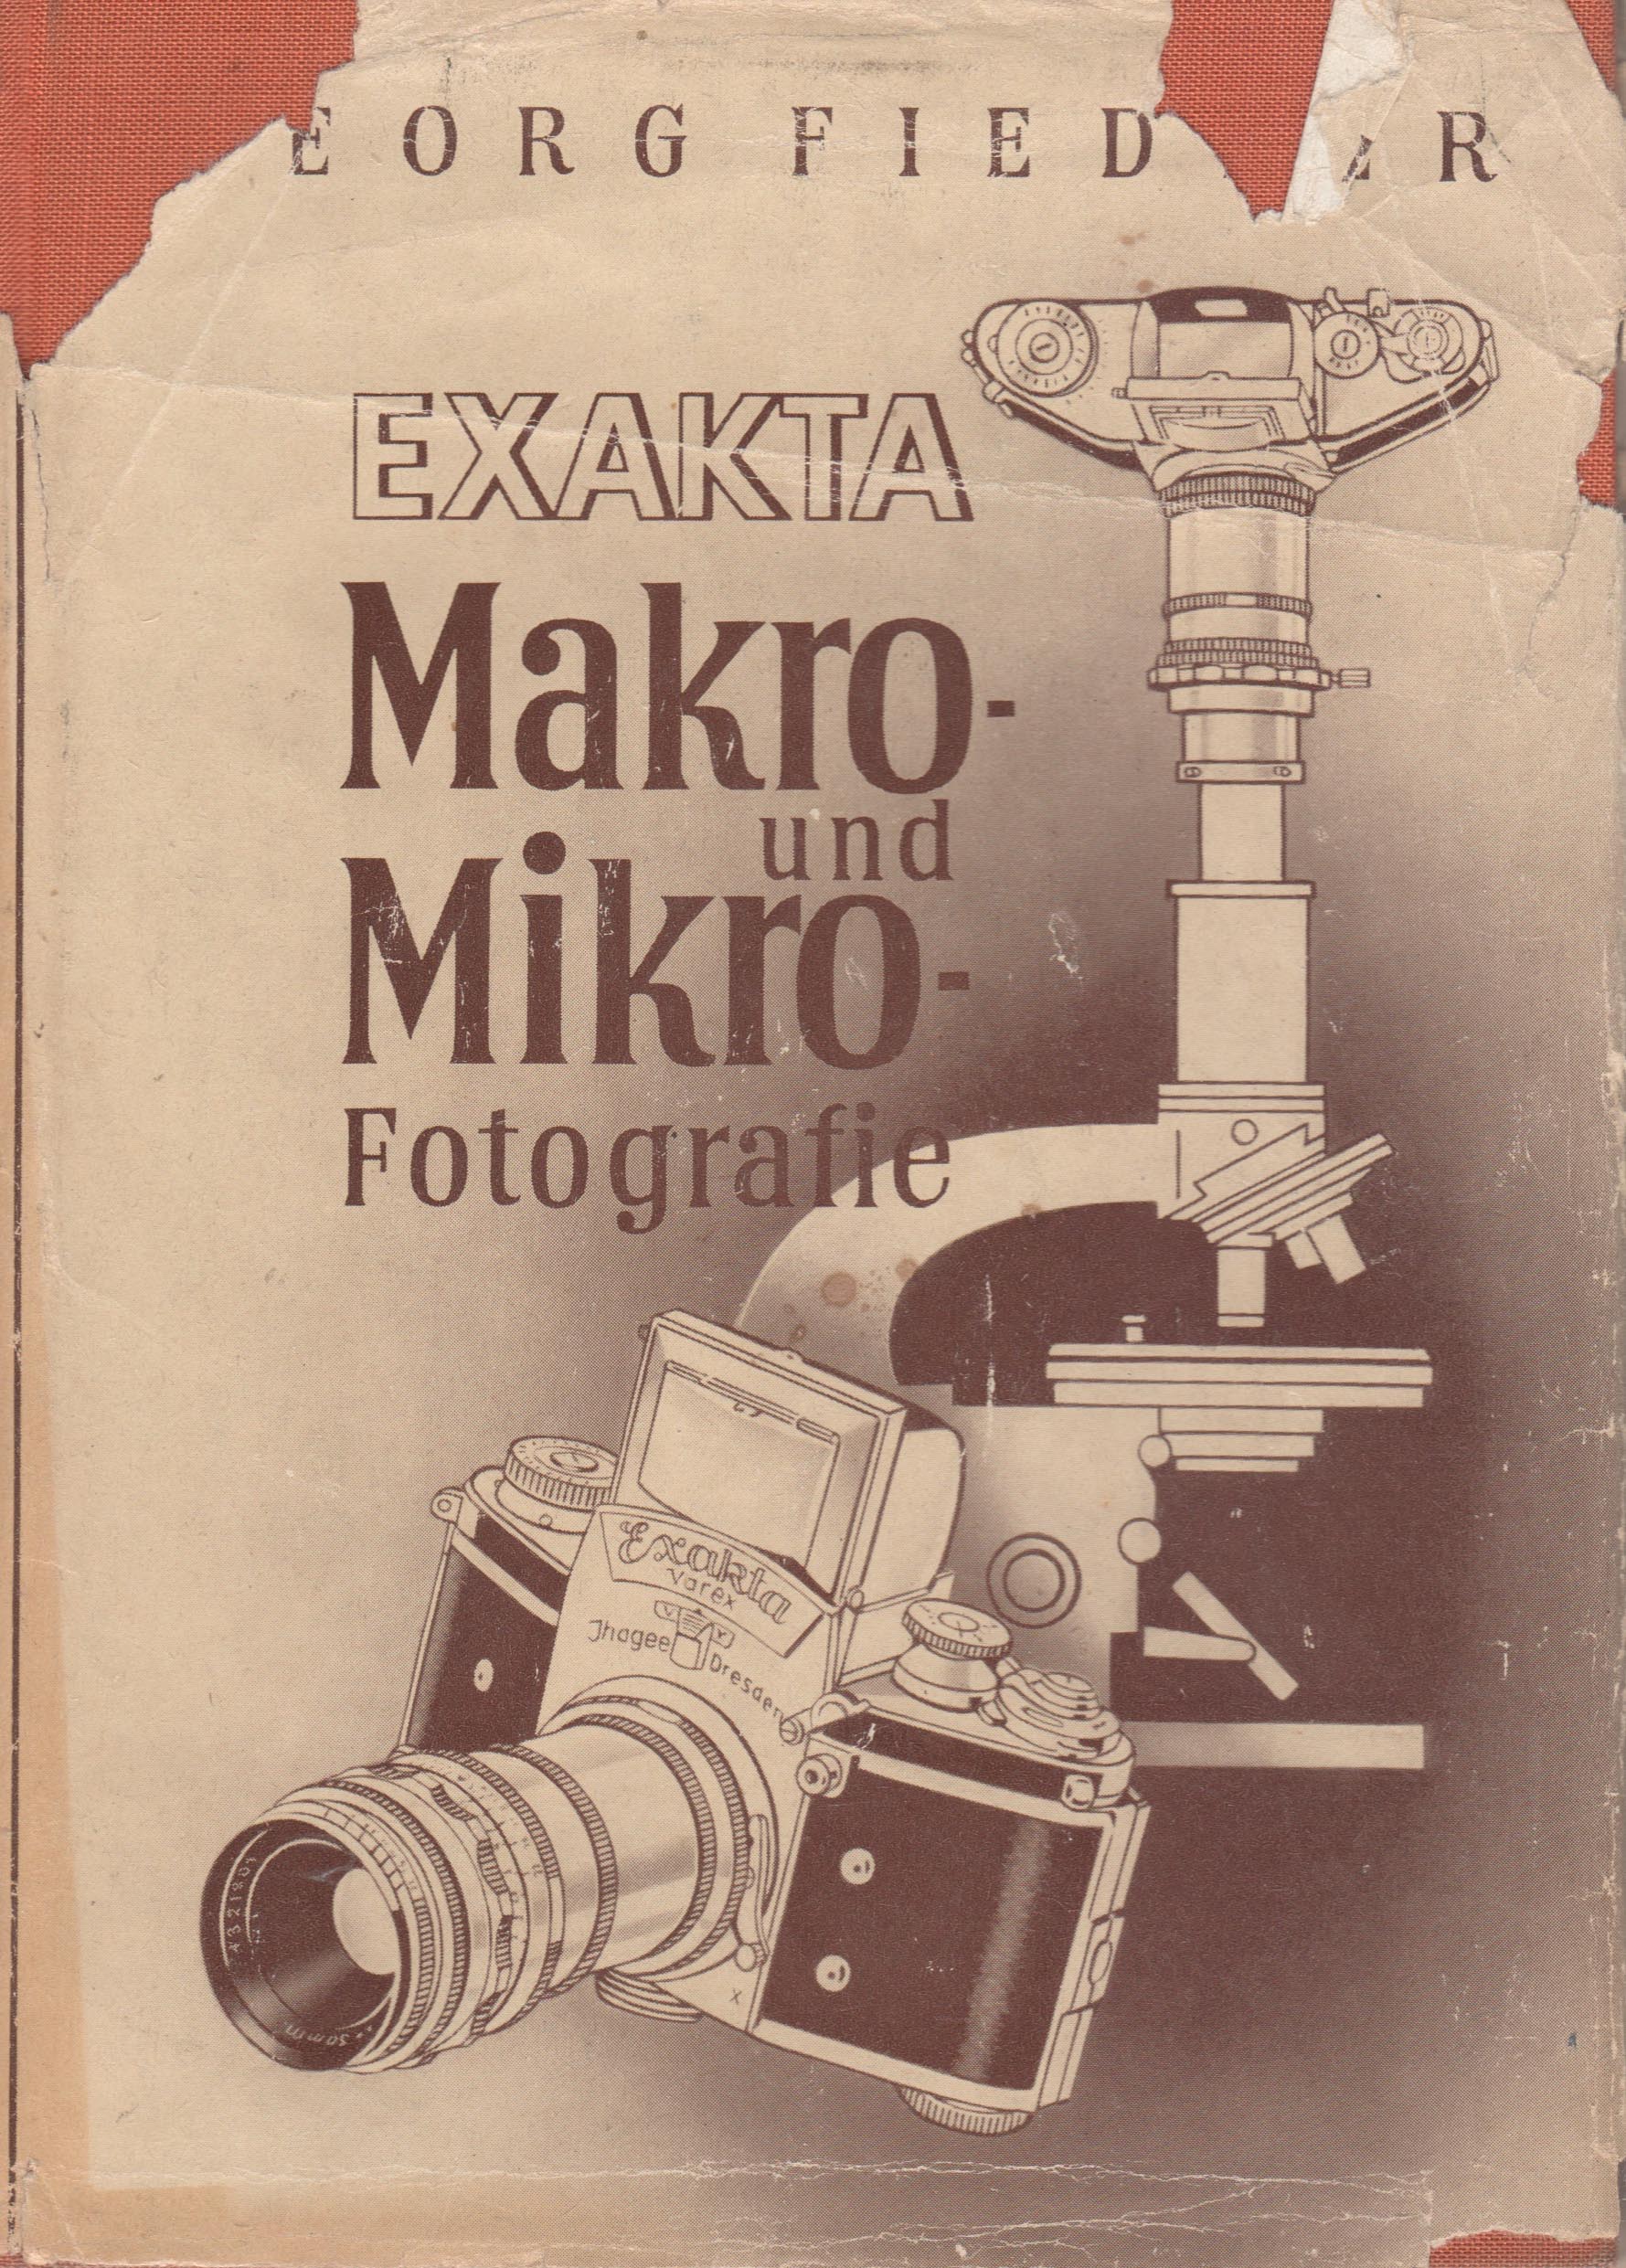 Exakta Makro- und Mikro-Fotografie (Georg Fiedler)